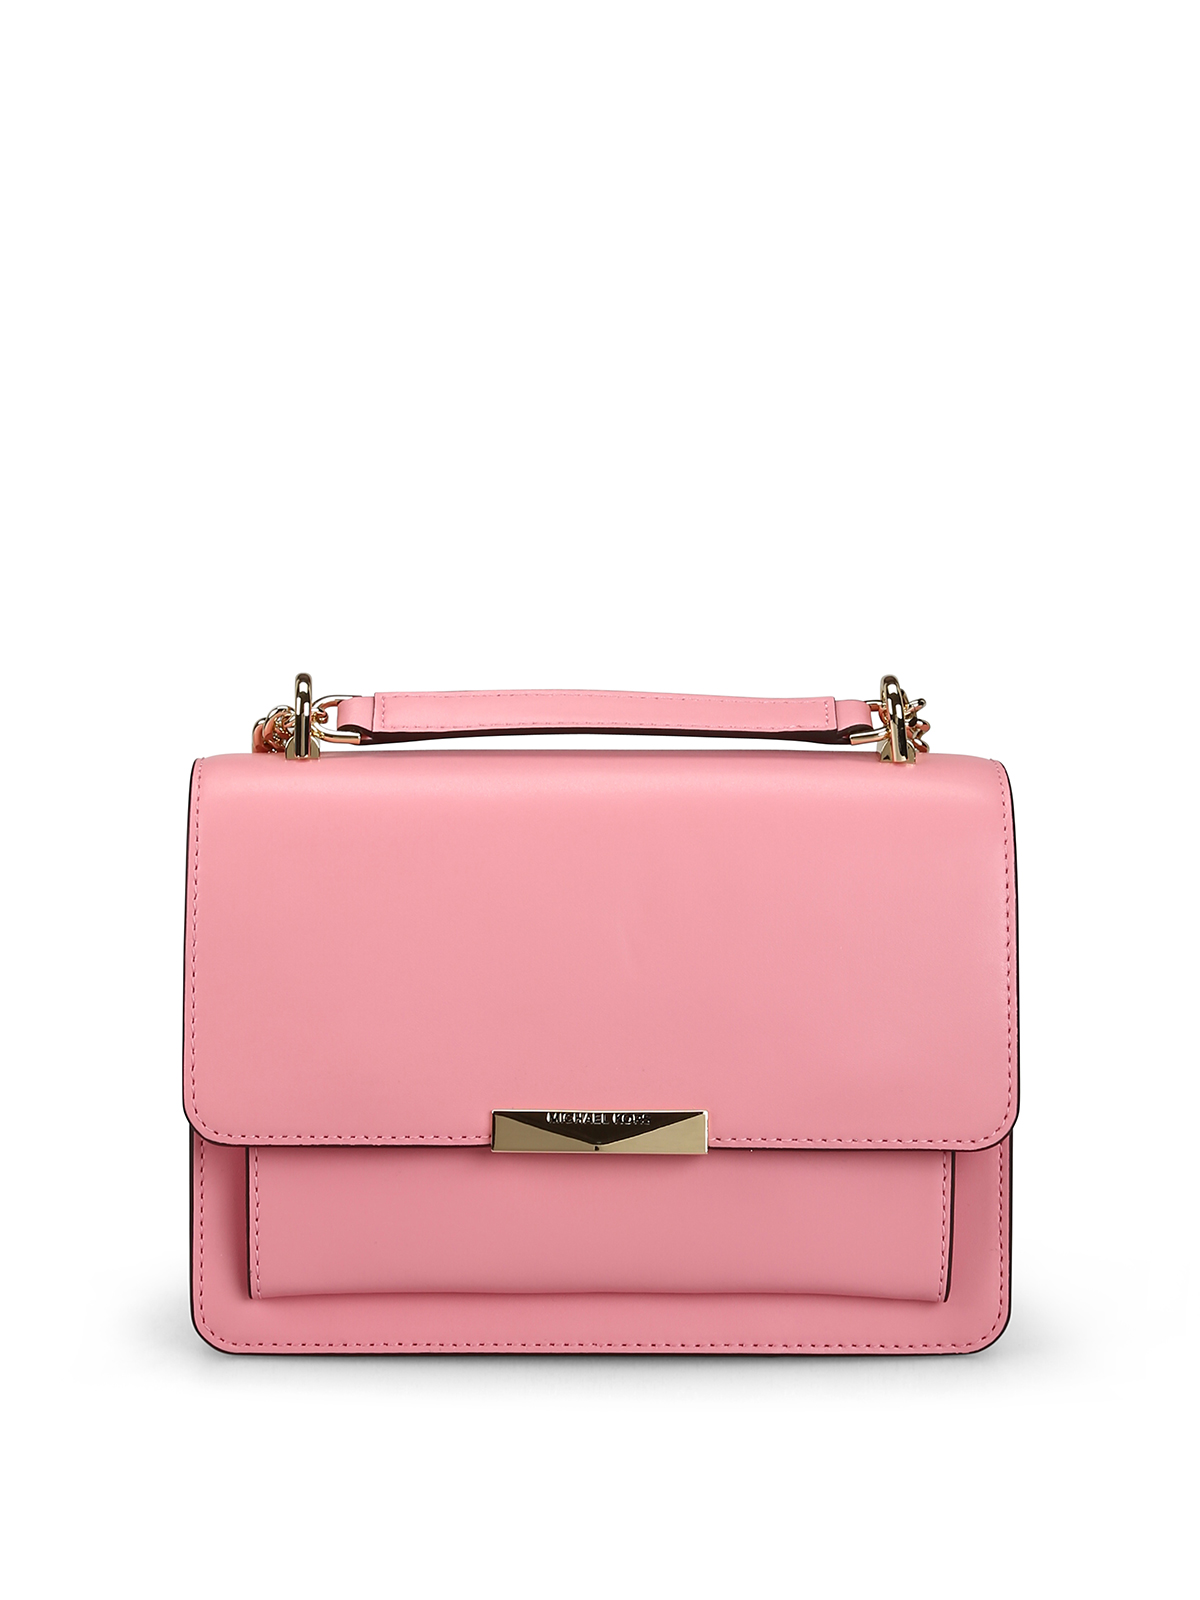 Jade L pink smooth leather bag 